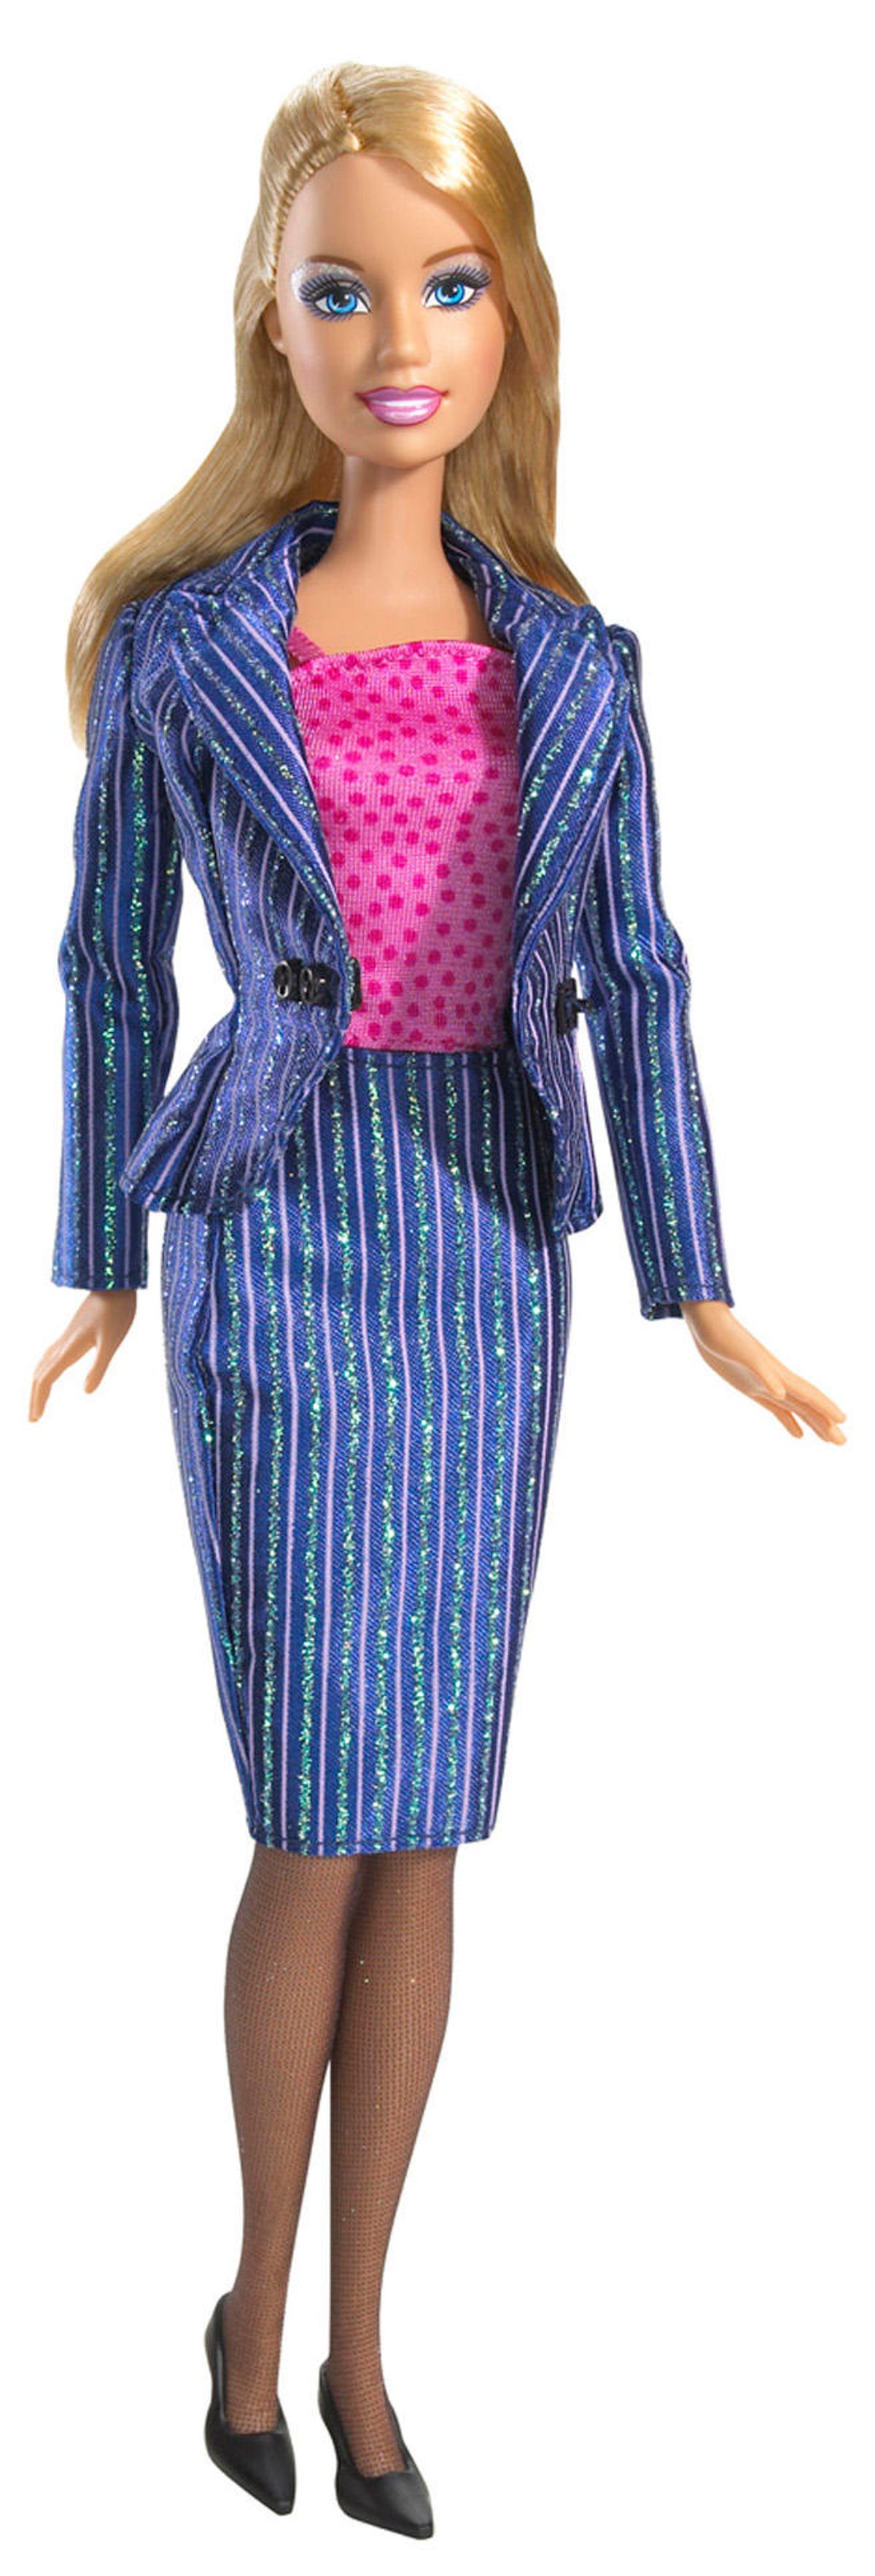 2009-barbie-president